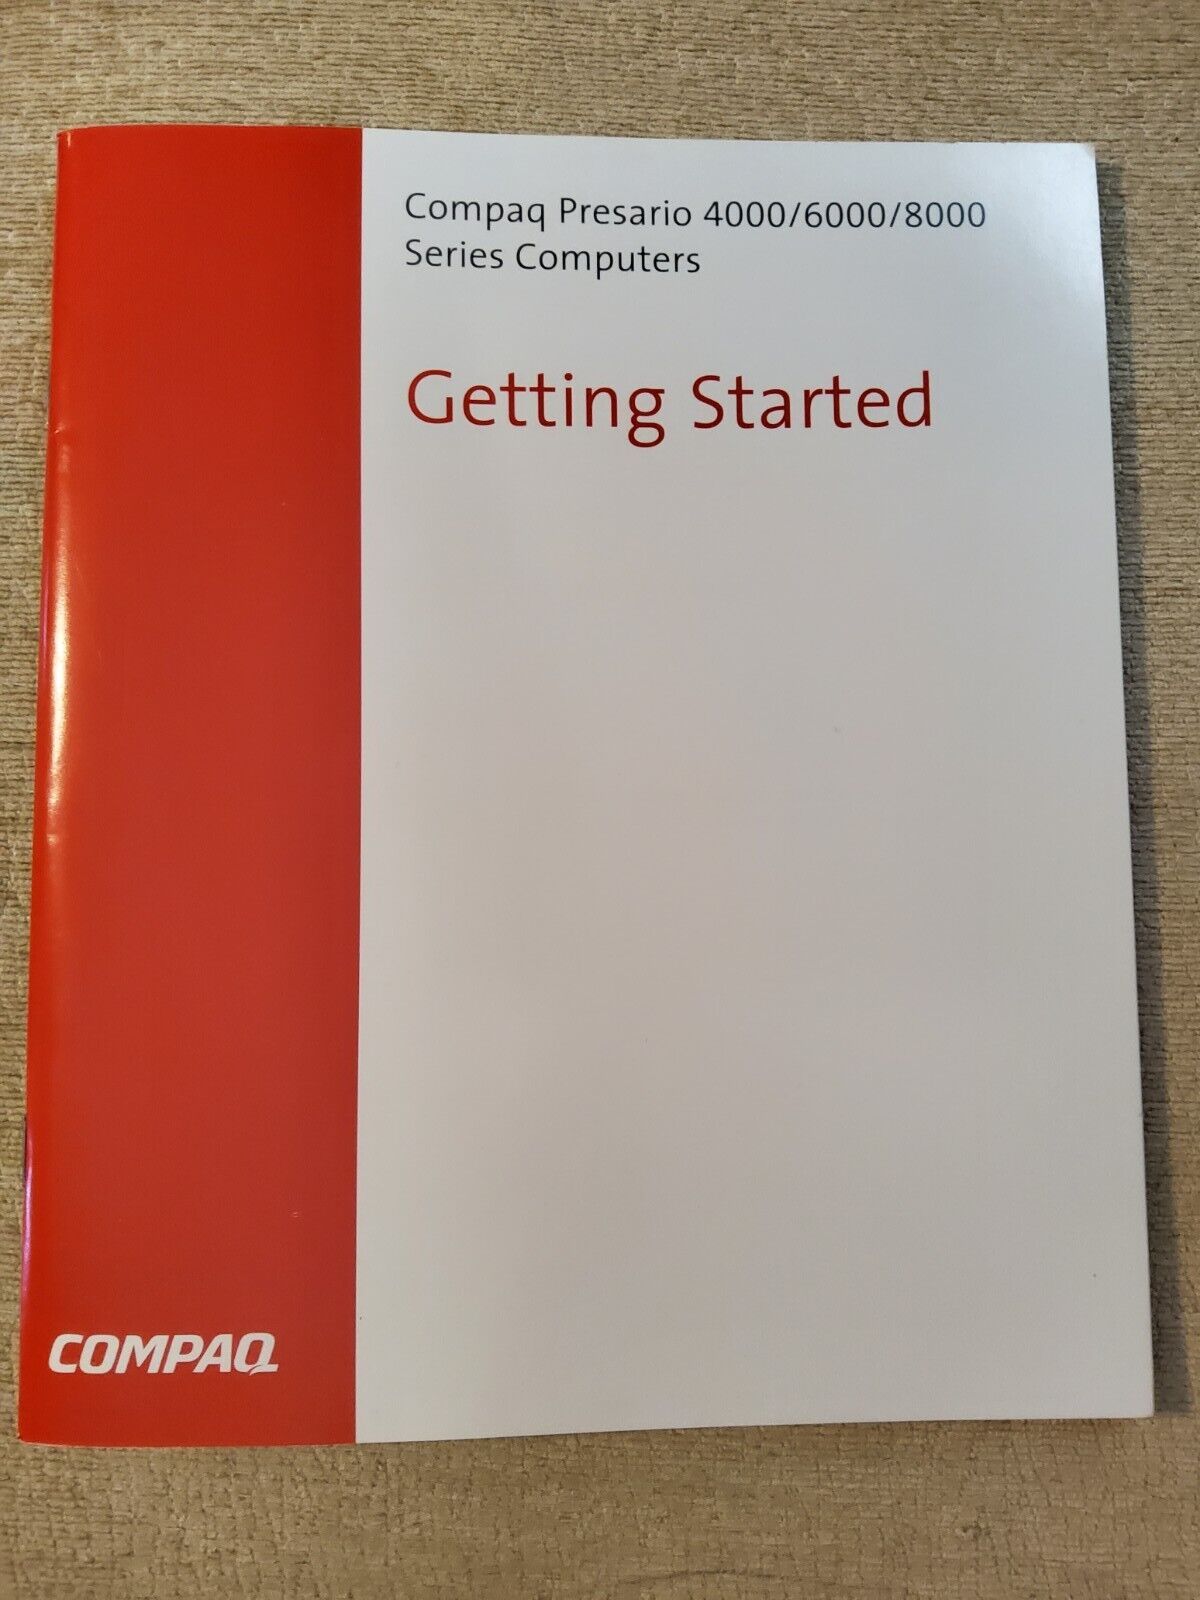 compaq presario 4000/6000/8000 series computers getting started